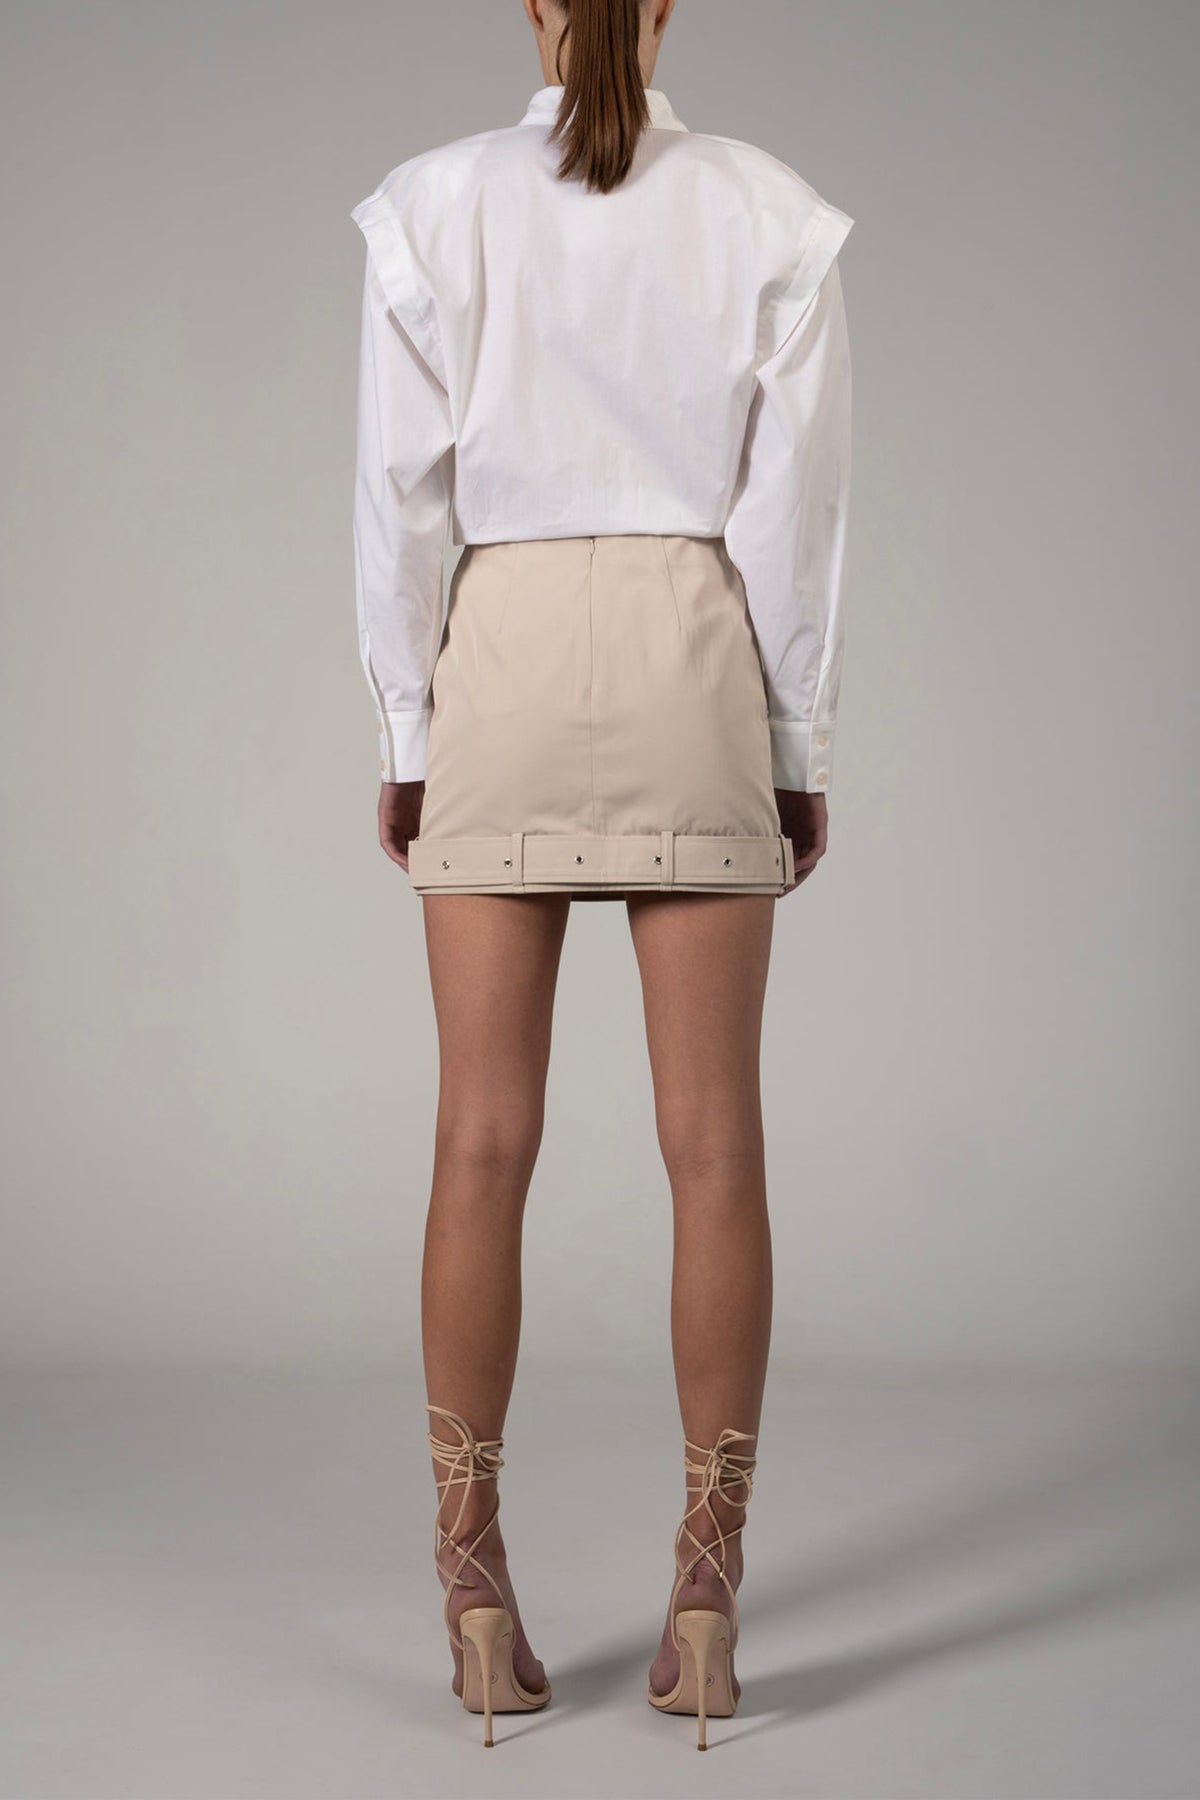 Kira Mini Skirt in Tan - shop-olivia.com